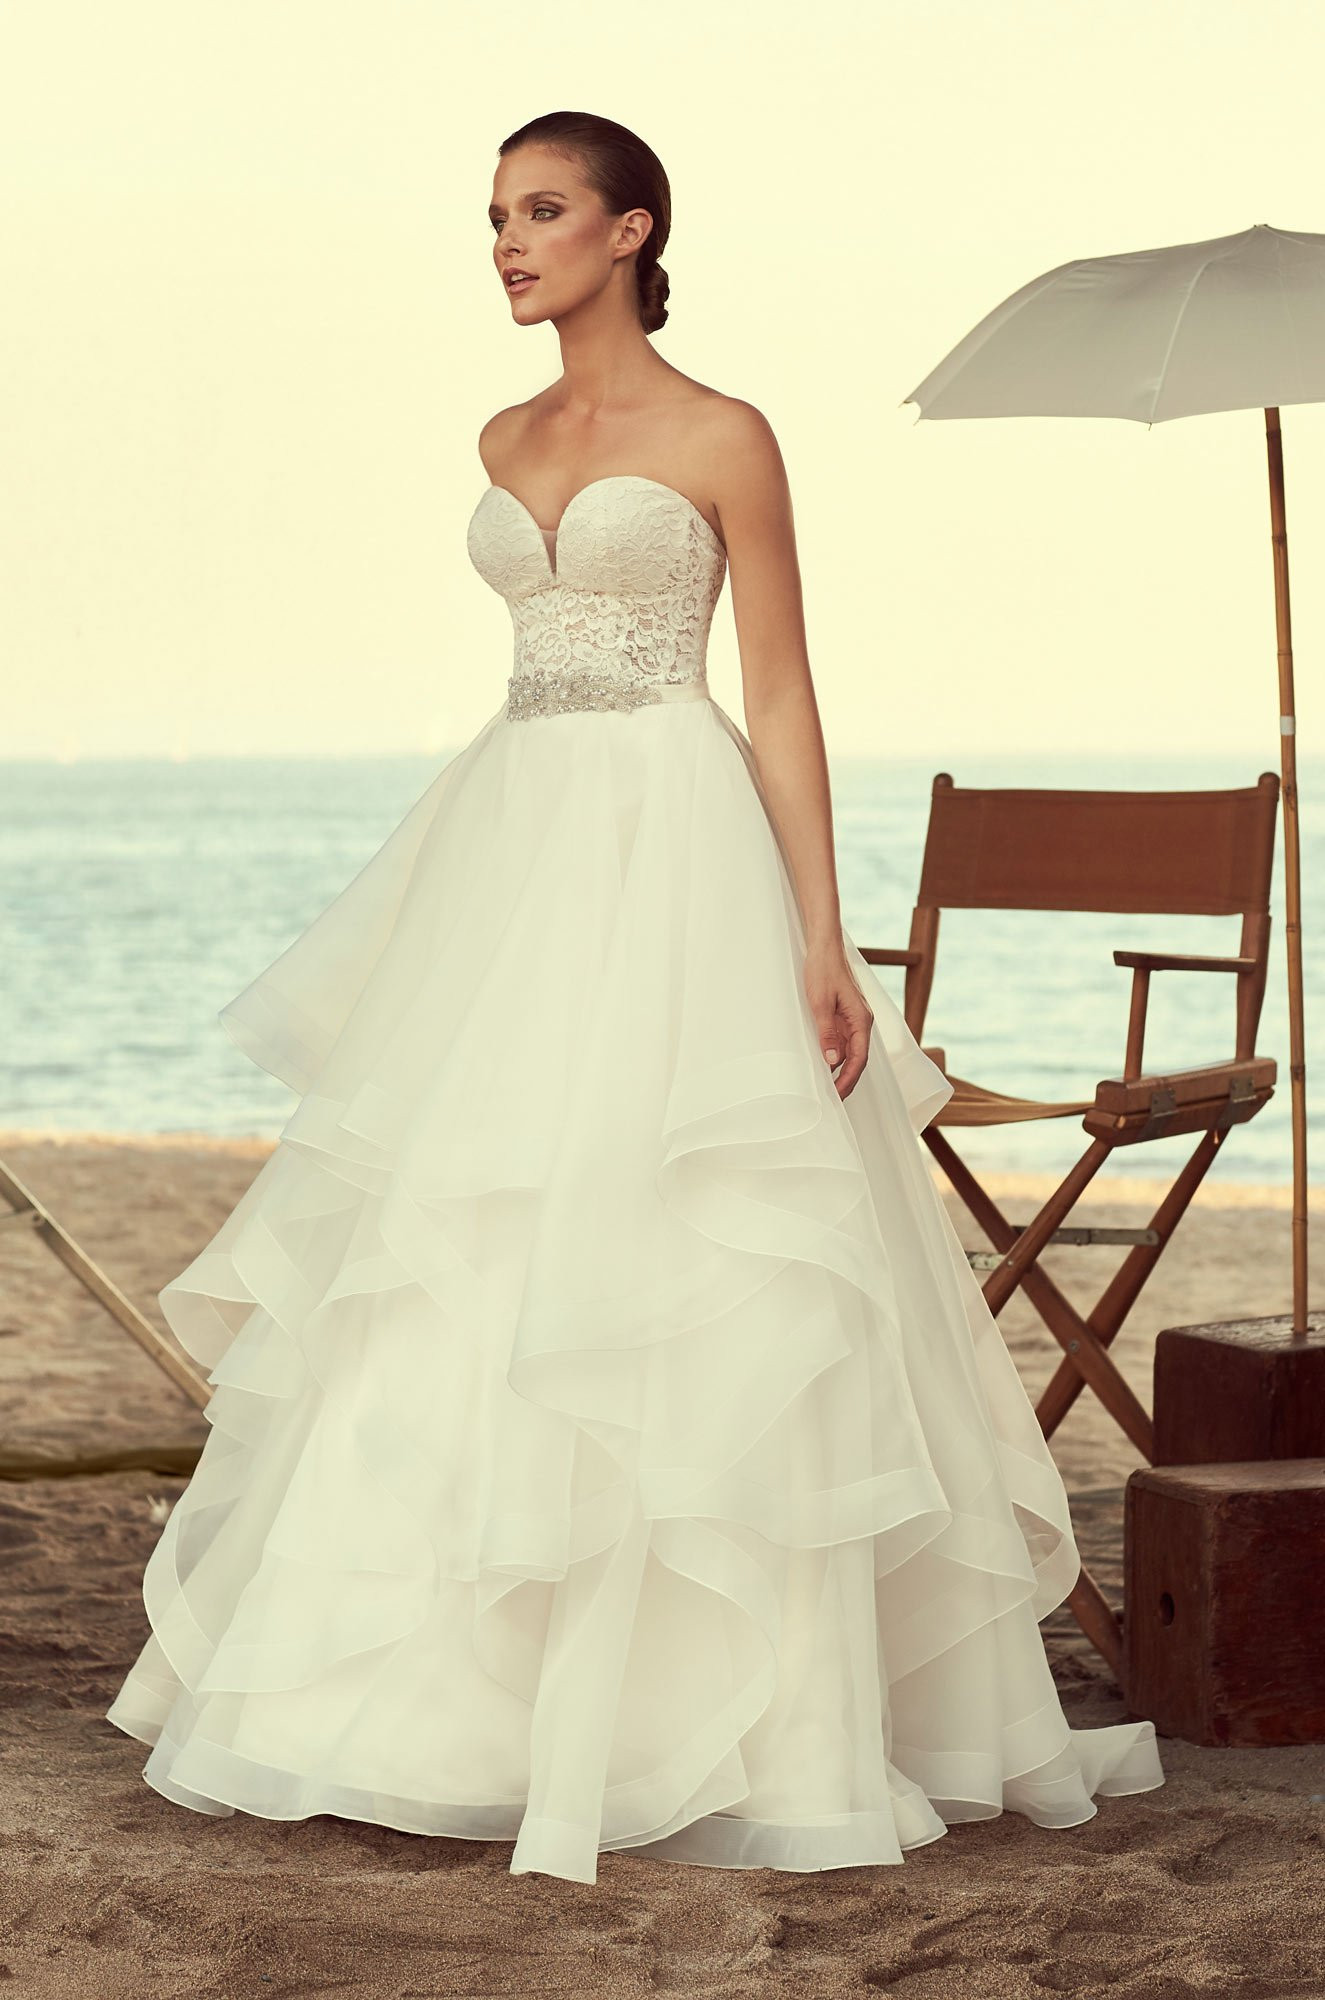 Corset Wedding Gown
 Strapless Corset Wedding Dress Style 2192